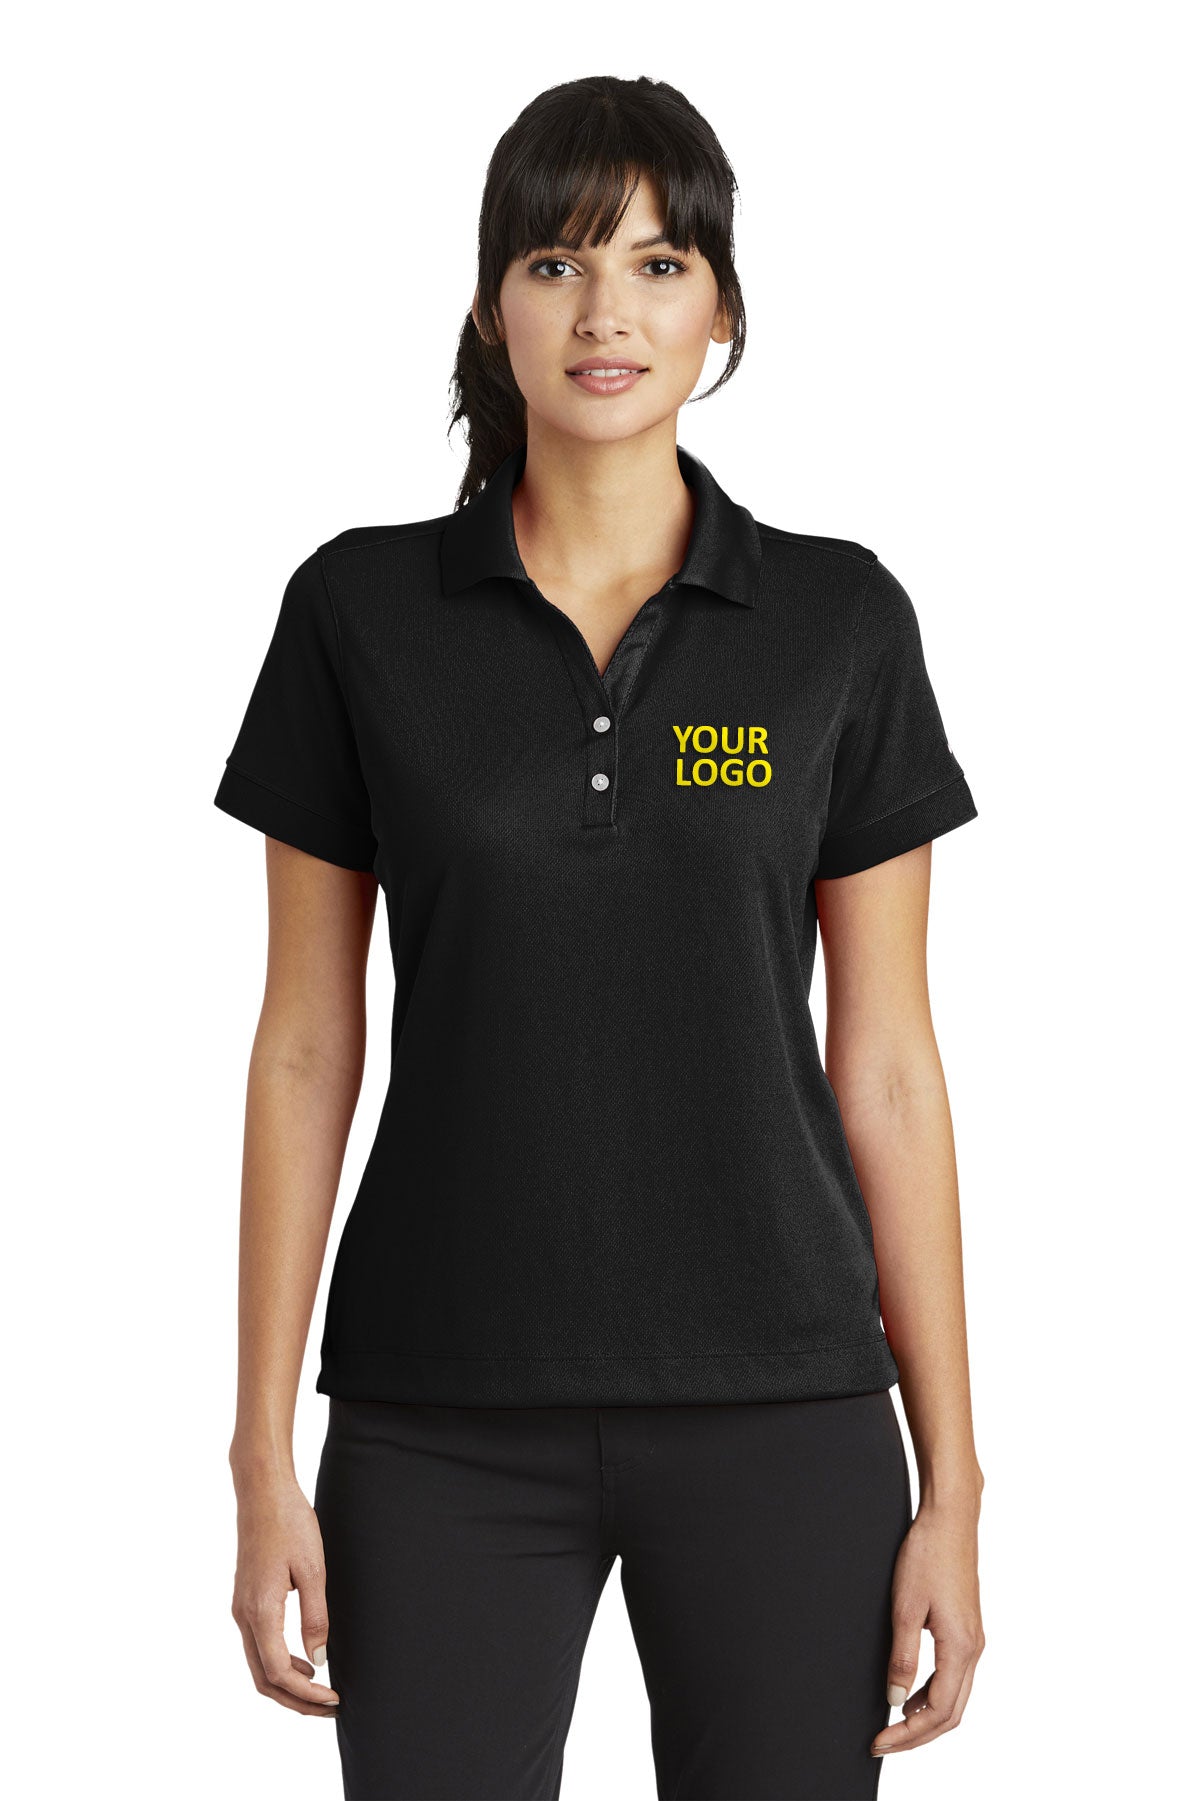 nike black 286772 custom polo shirts for work